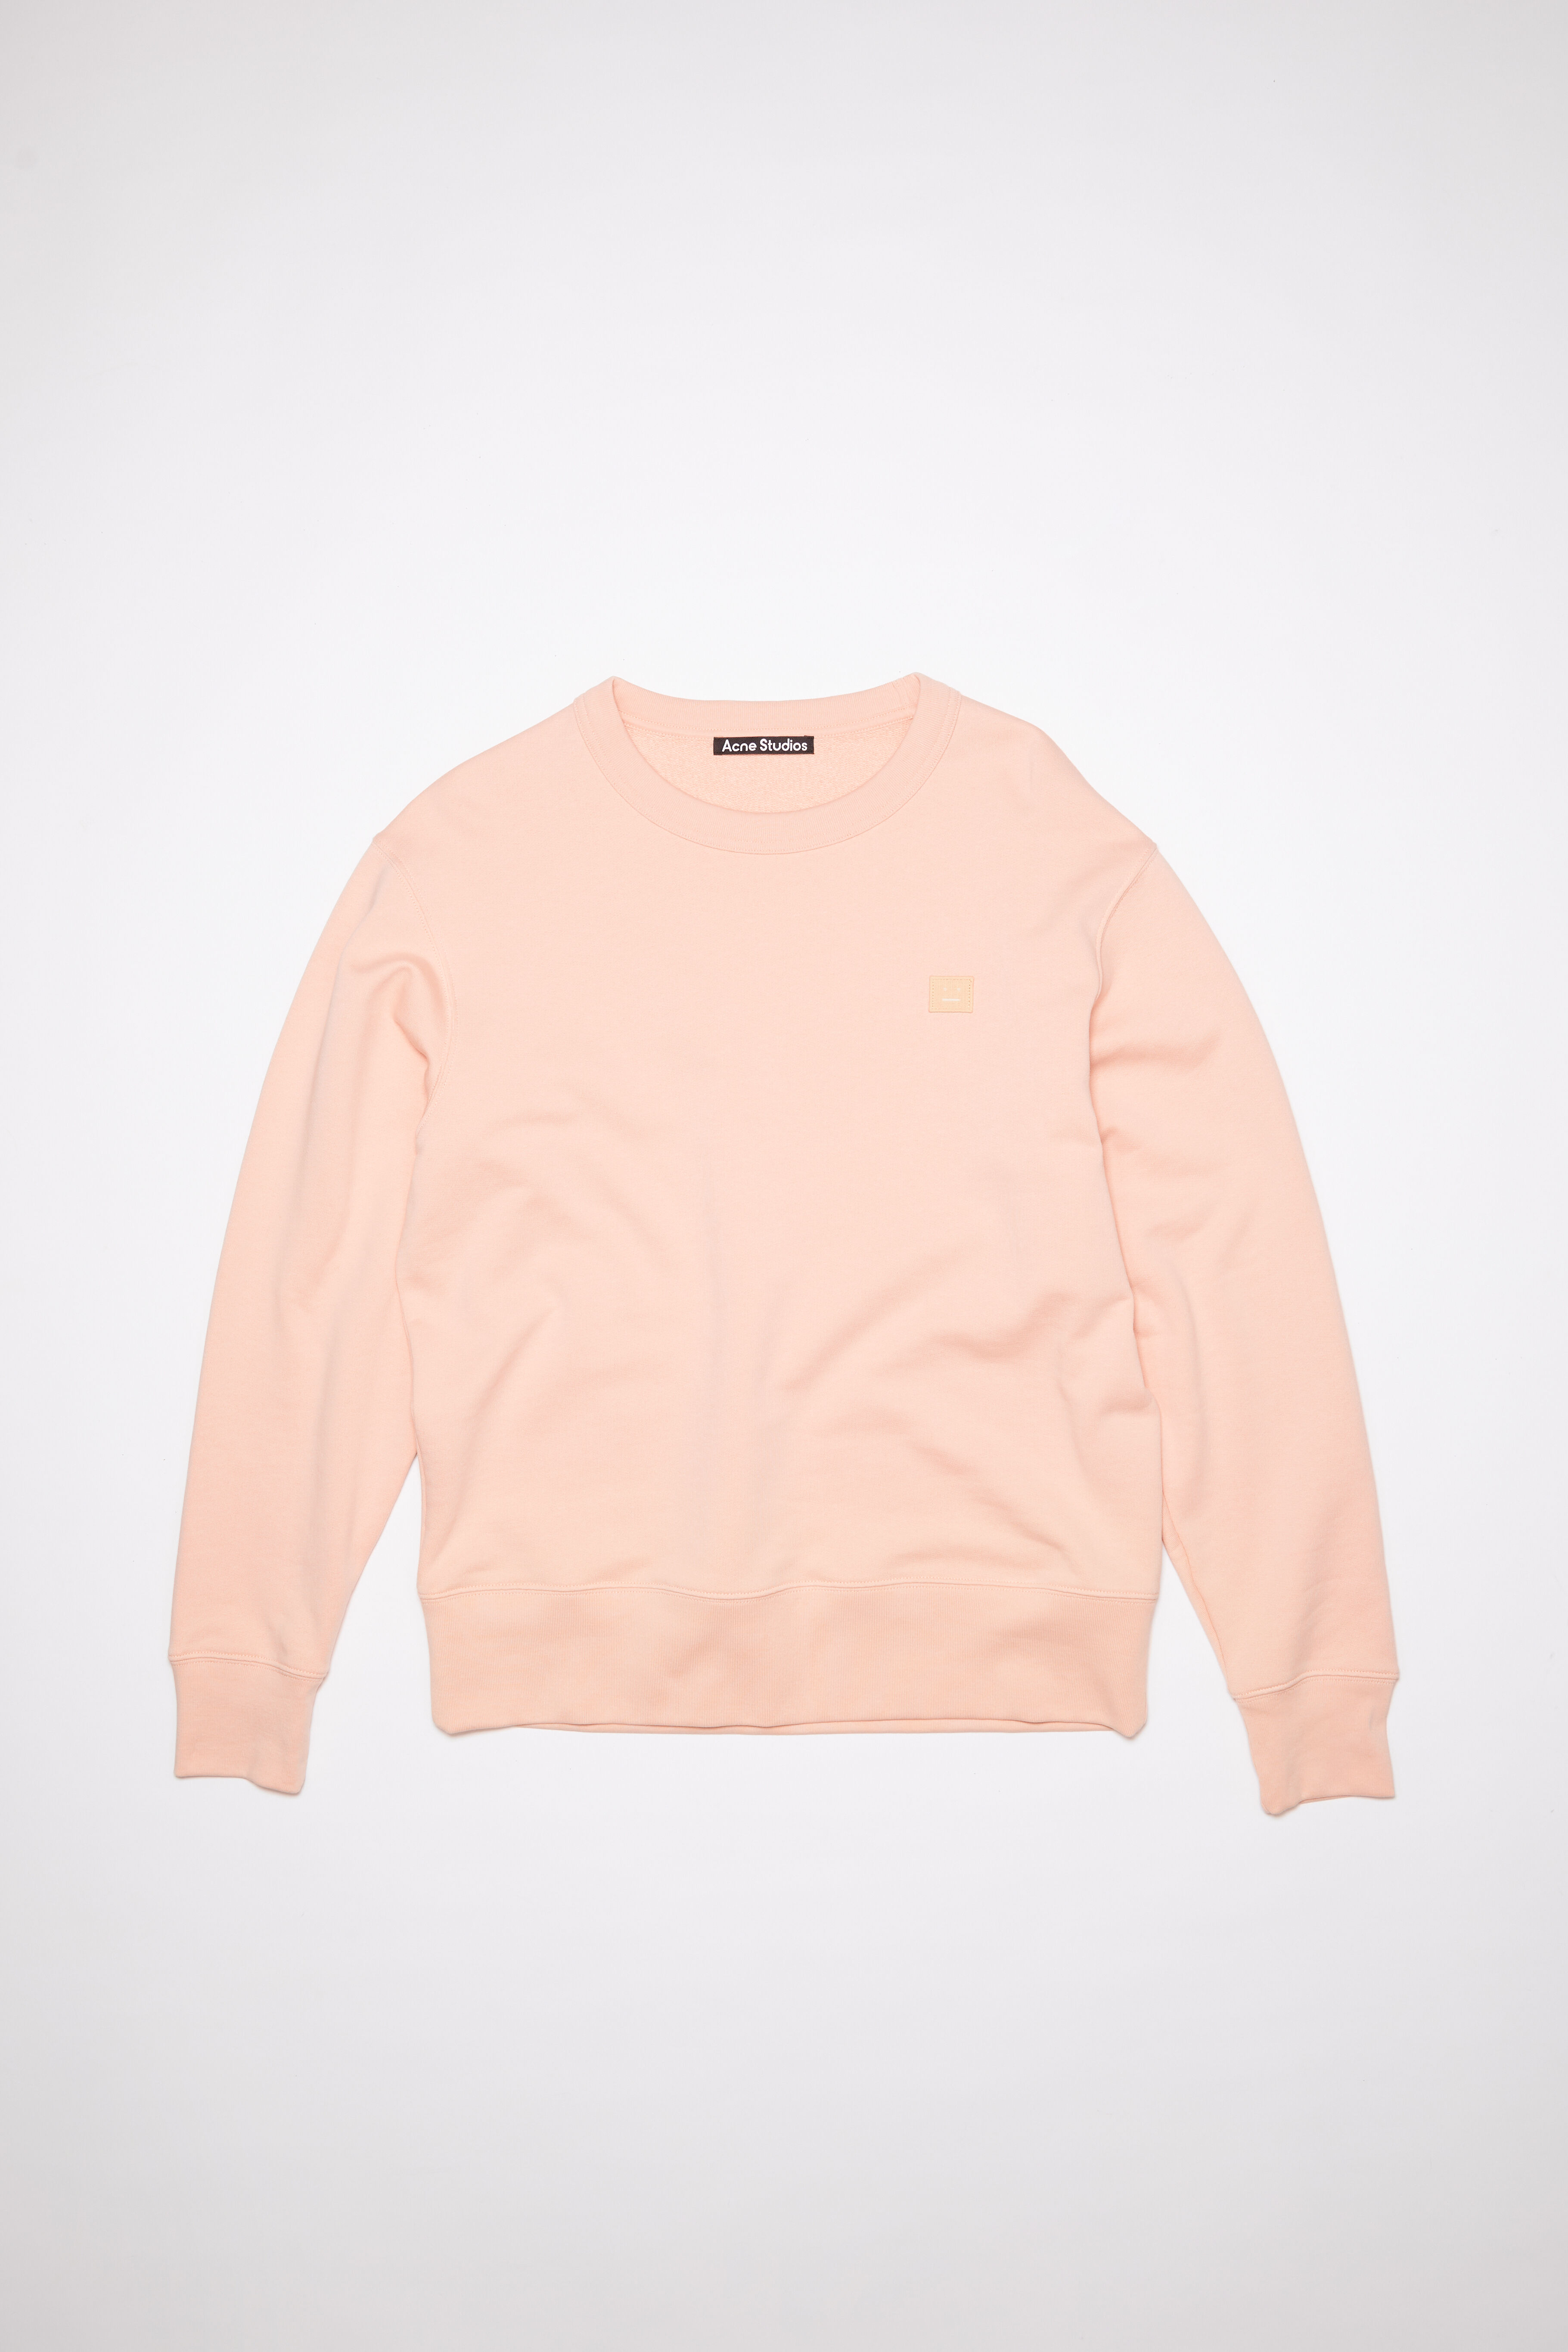 Acne Studios - Crew neck sweatshirt - Regular fit - Powder pink